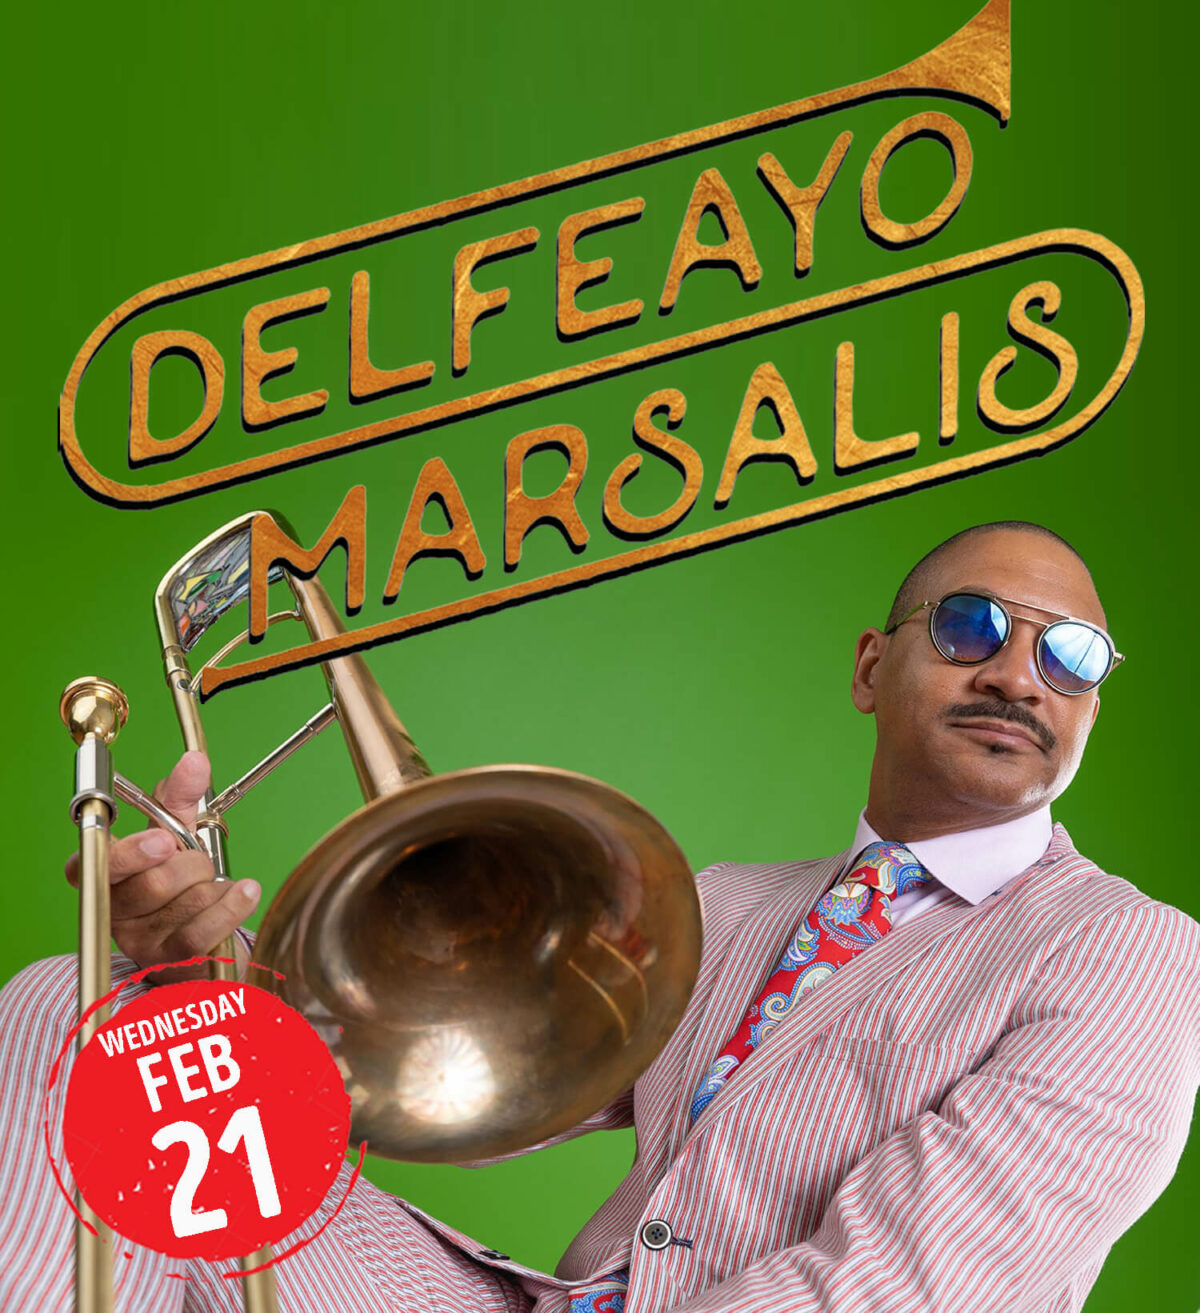 Delfeayo Marsalis Quintet 7:30 PM SHOW - Dromnyc.com